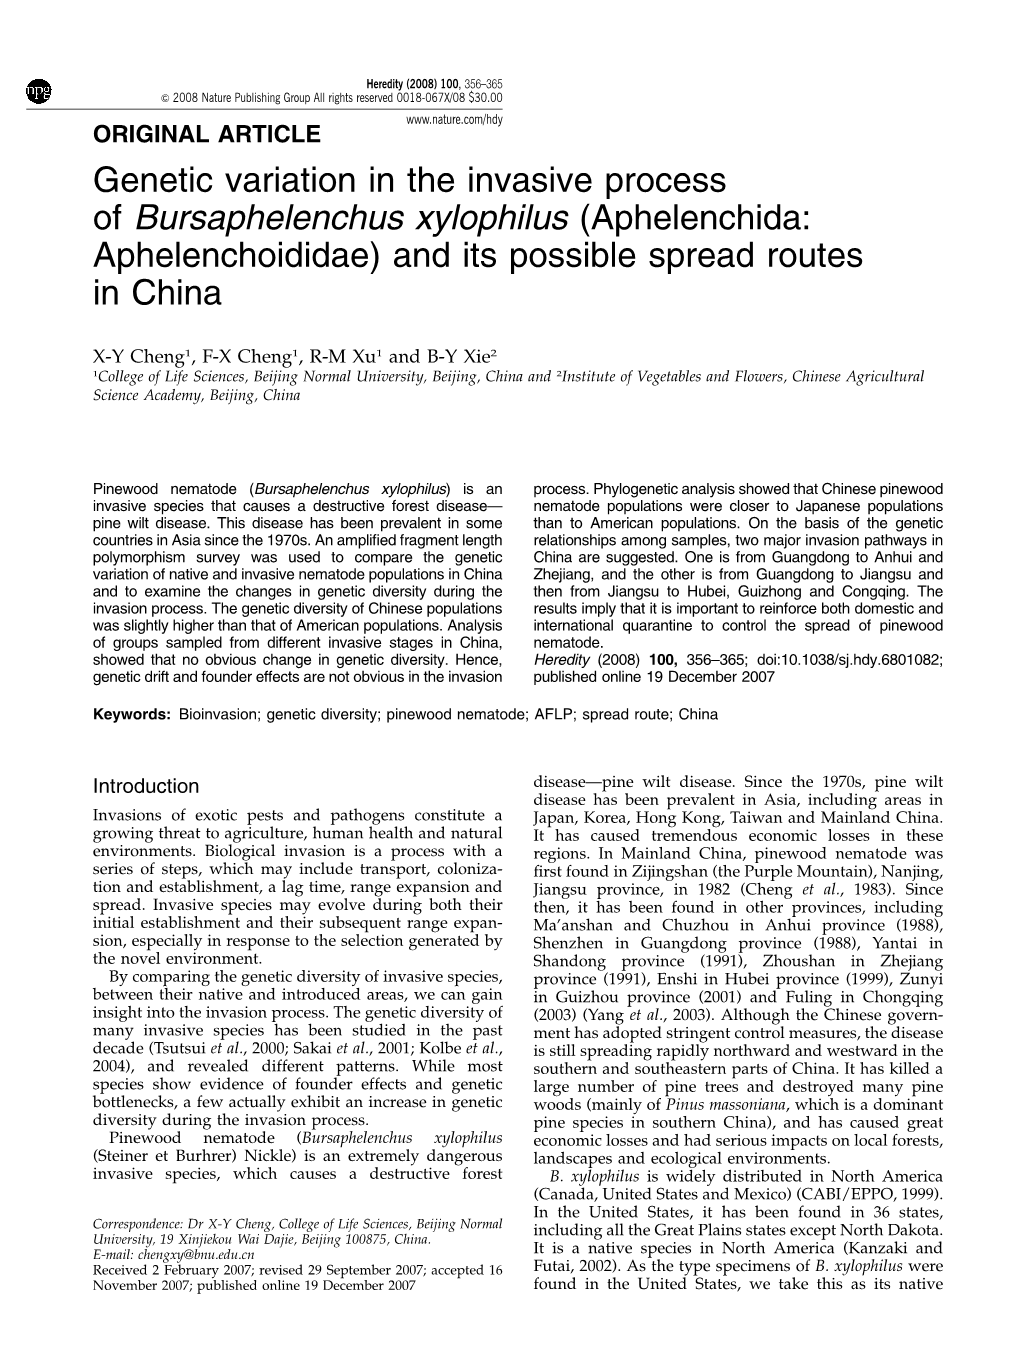 Genetic Variation in the Invasive Process of Bursaphelenchus Xylophilus (Aphelenchida: Aphelenchoididae) and Its Possible Spread Routes in China